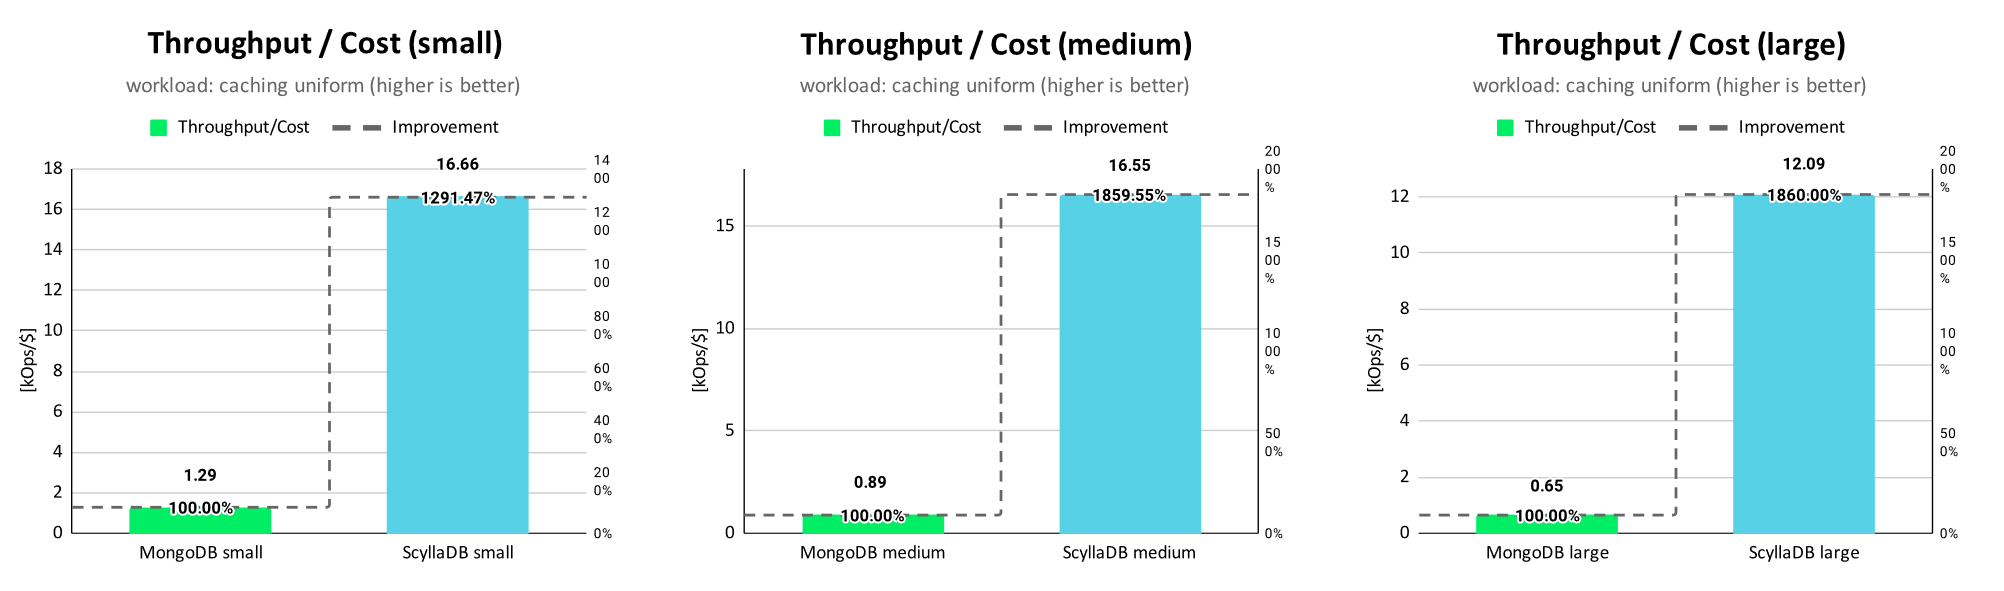 MongoDB vs ScyllaDB - Throughput Cost small - caching uniform